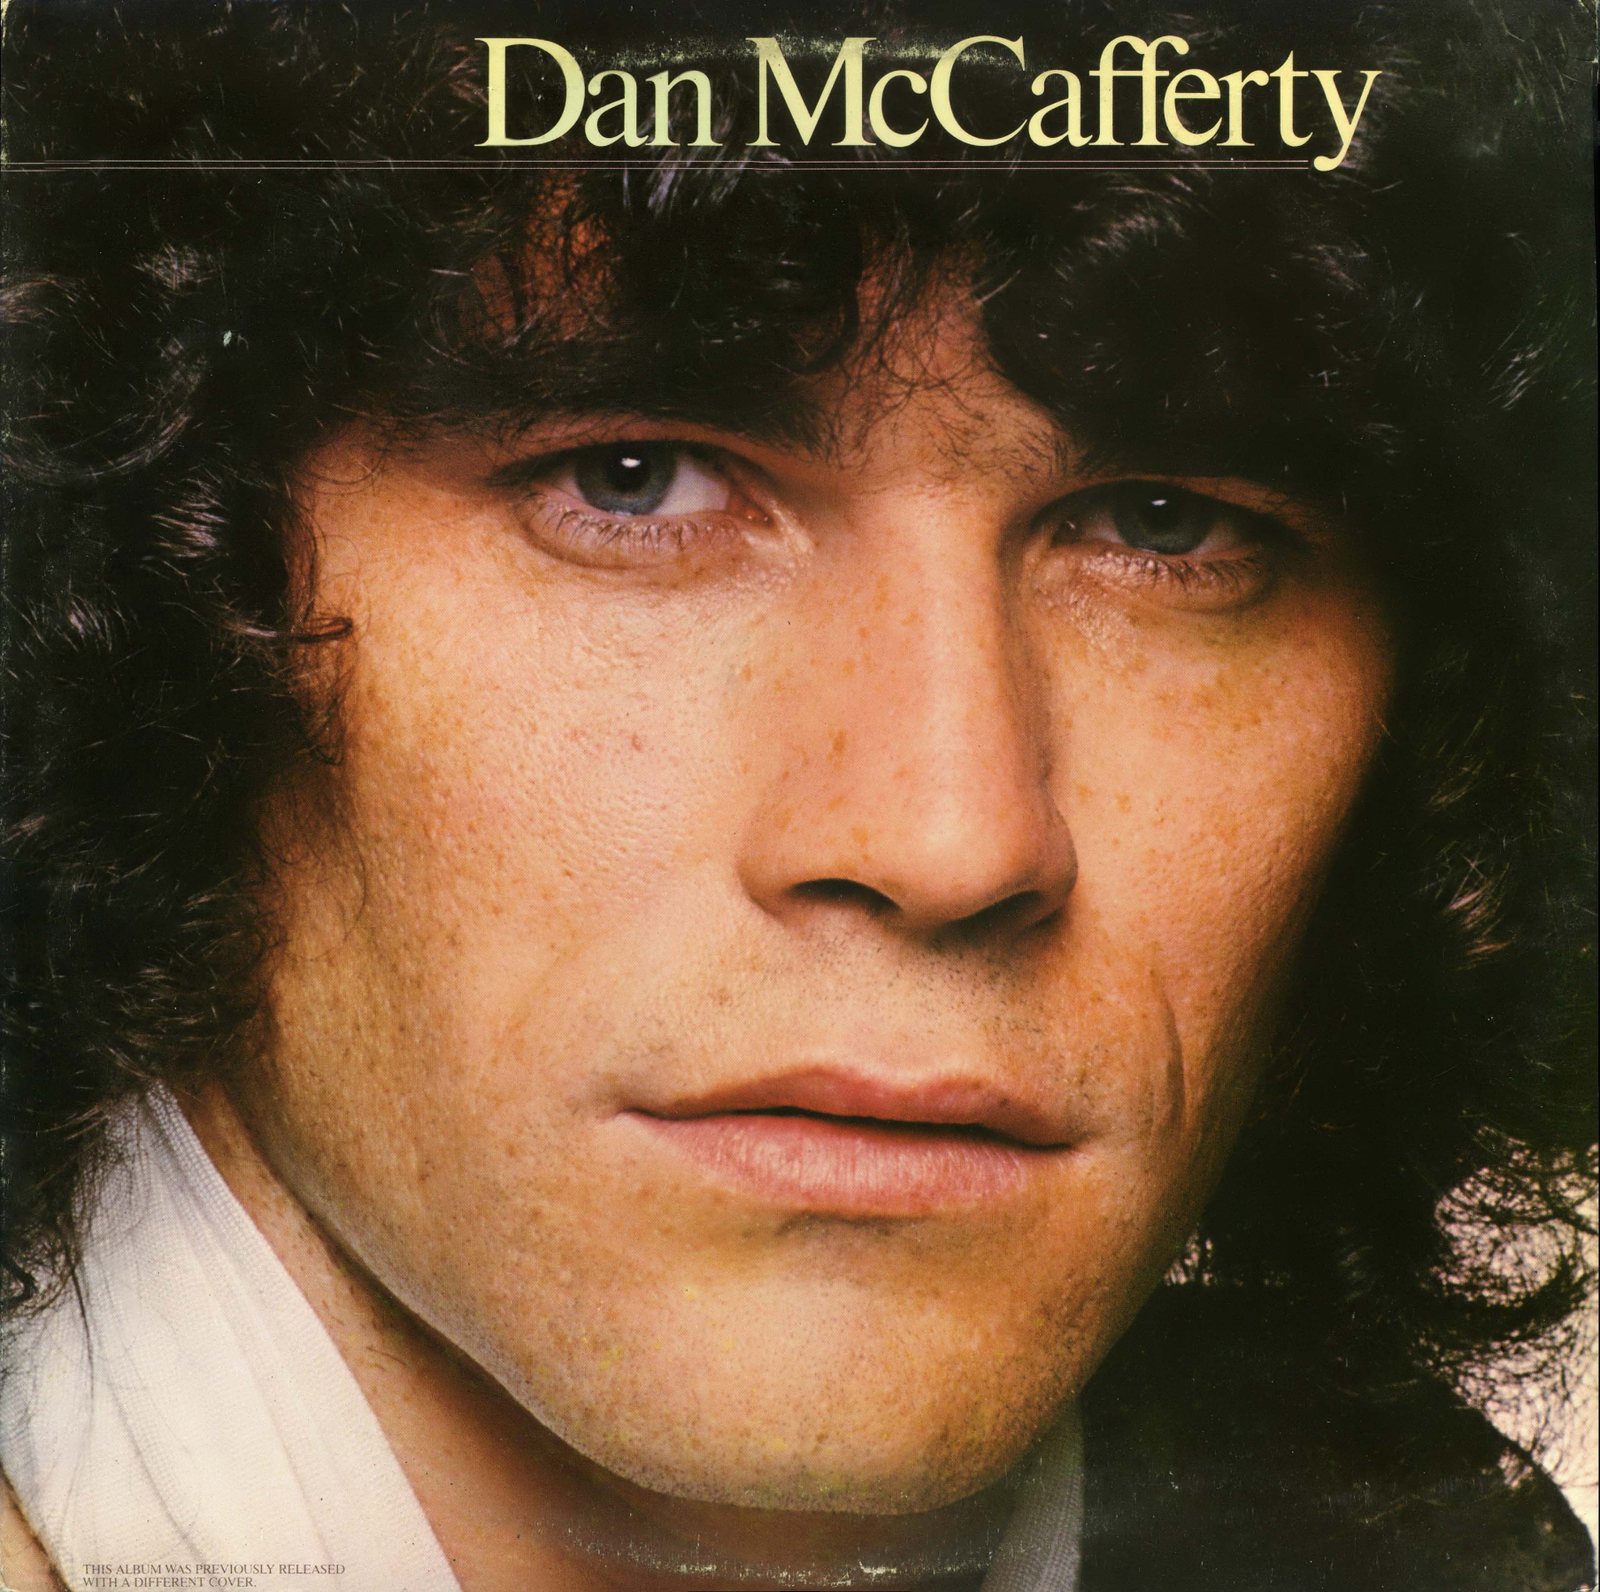 Dan McCafferty - Dan McCafferty_Face   вввв.jpg